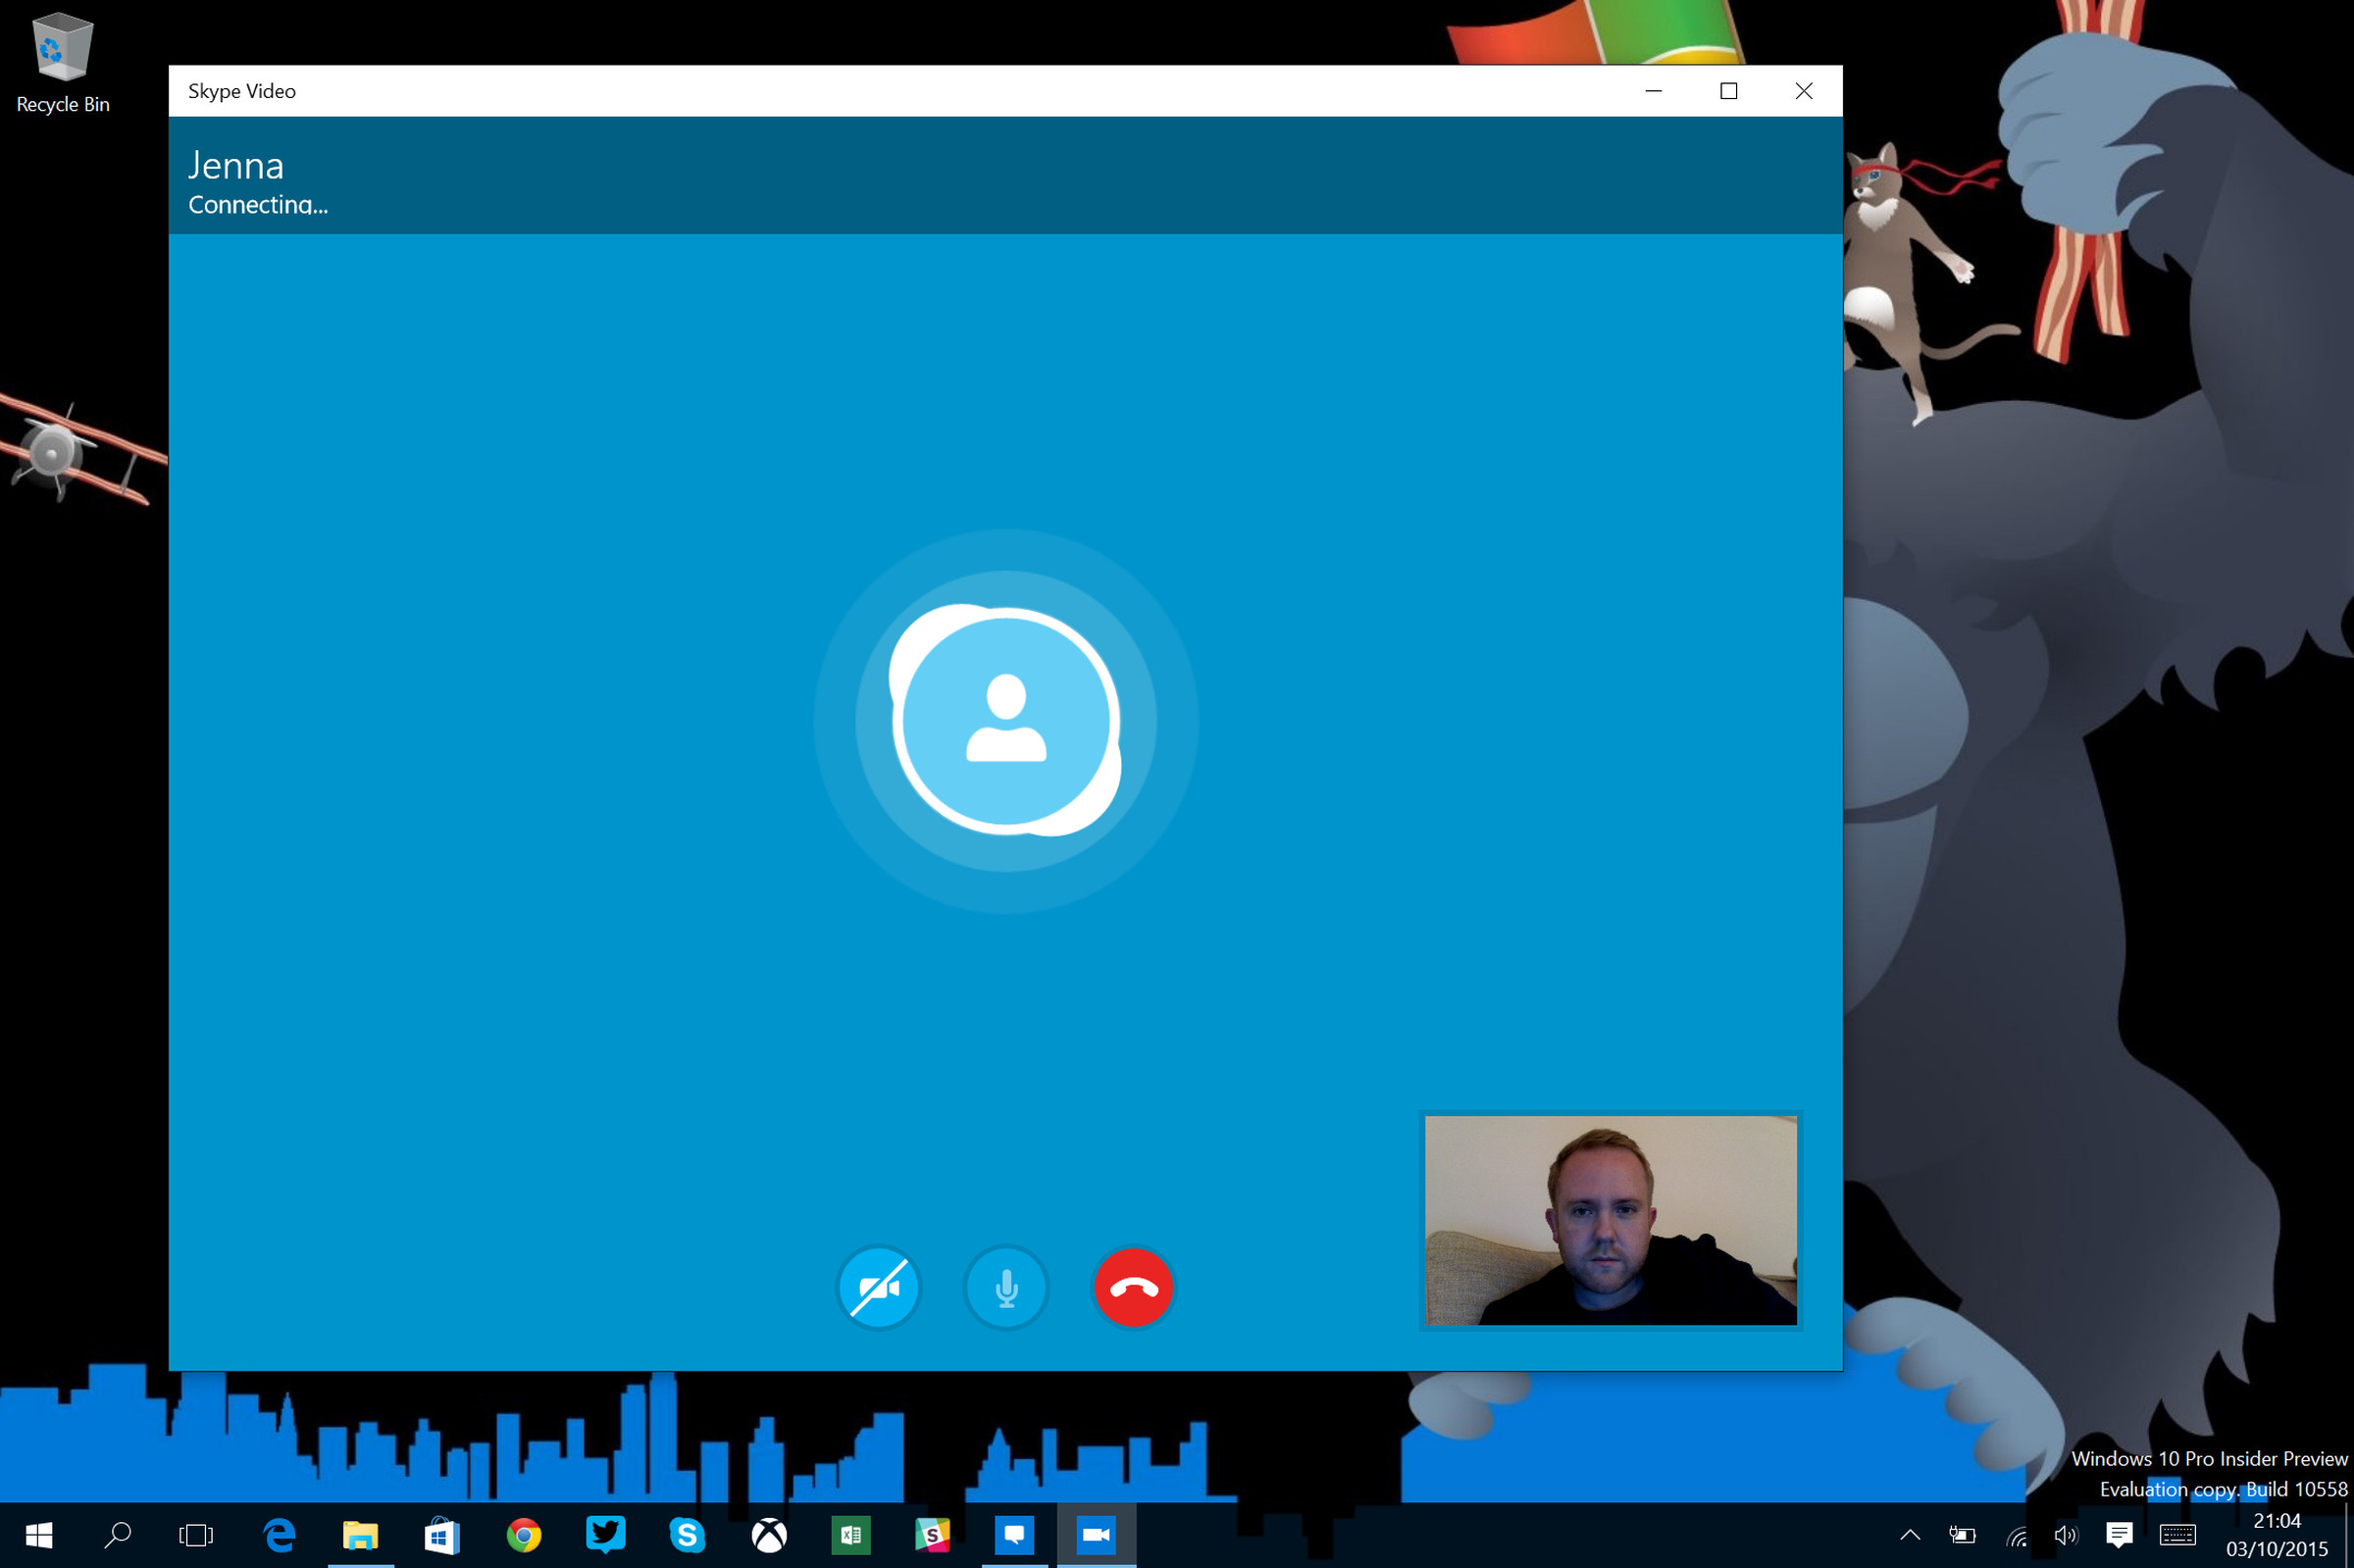 Windows 10 Skype integration